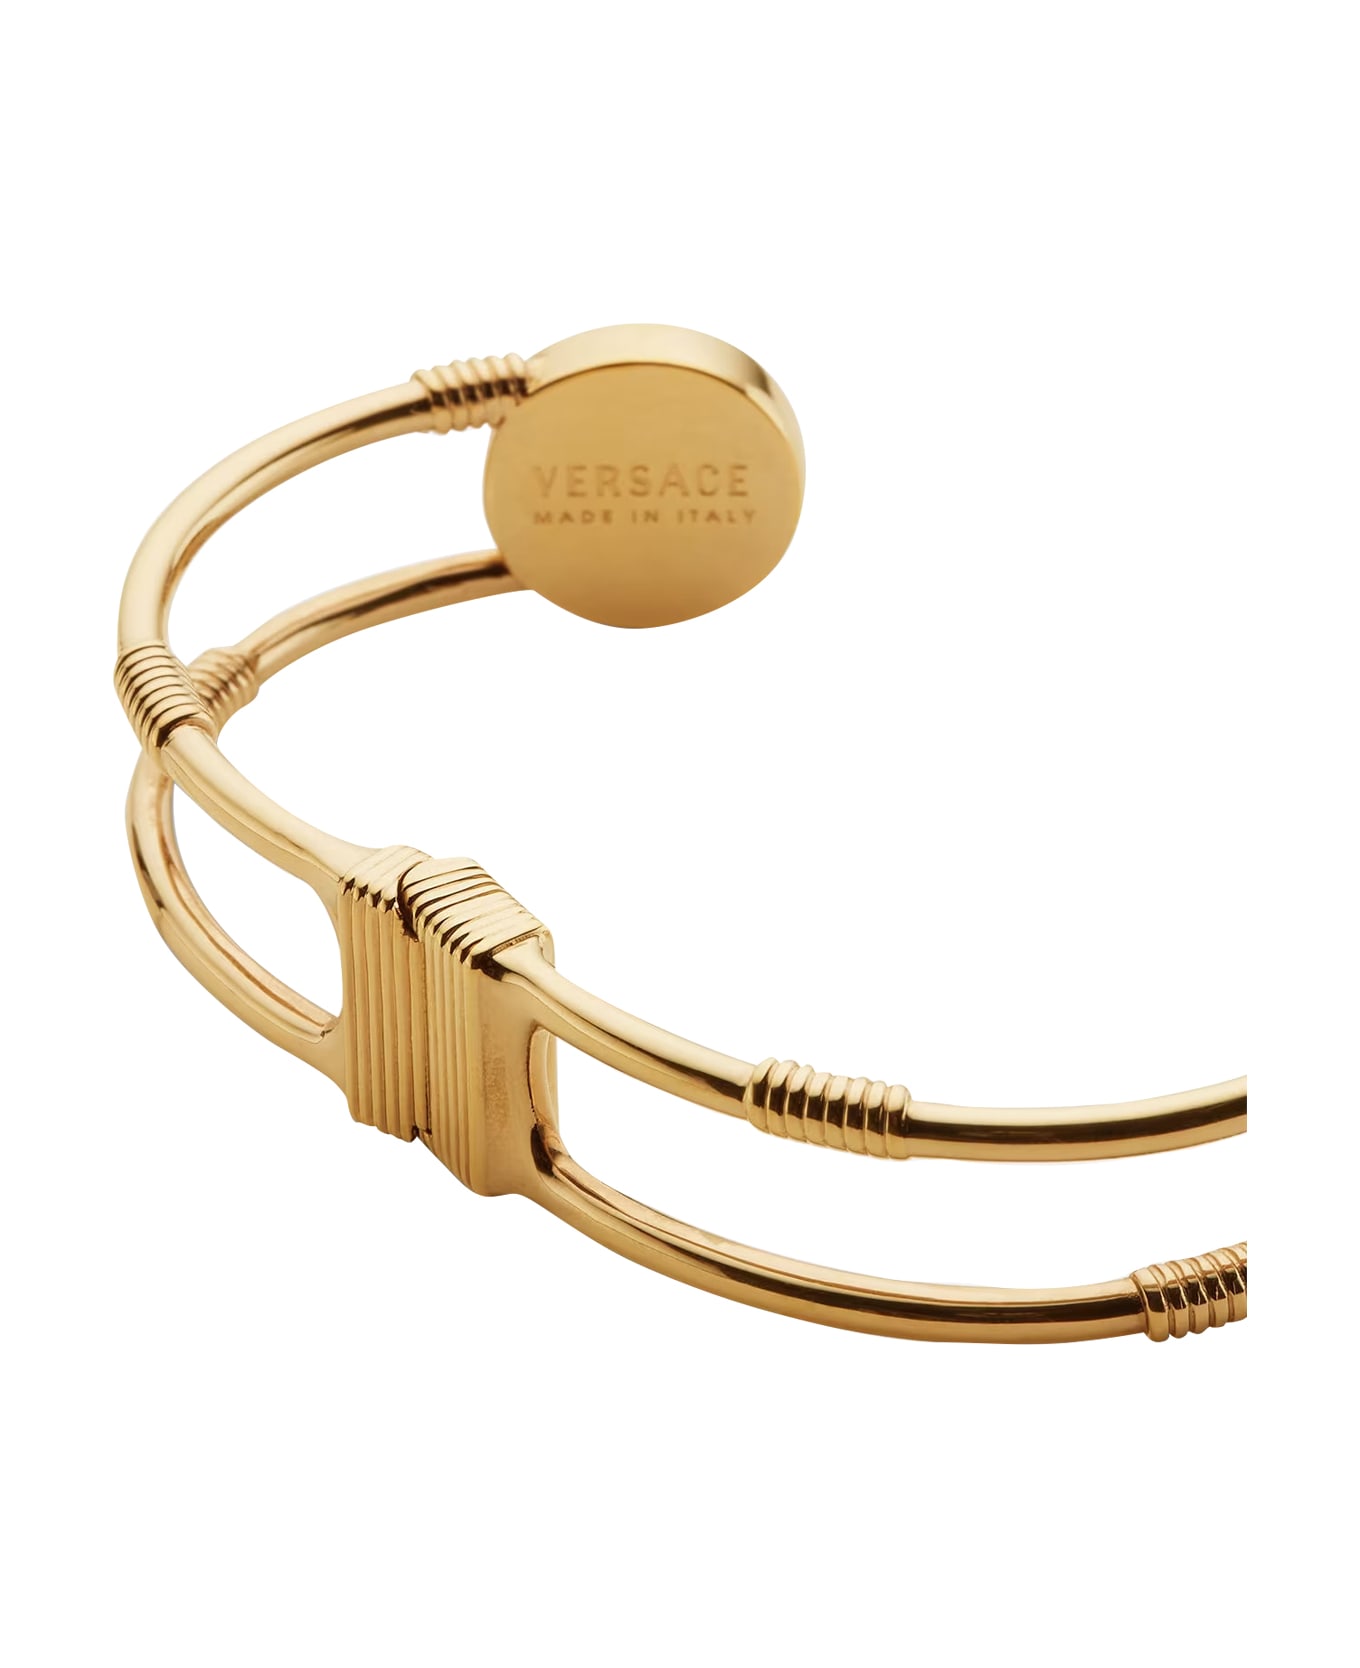 Versace Cuff Bracelet - Versace Gold